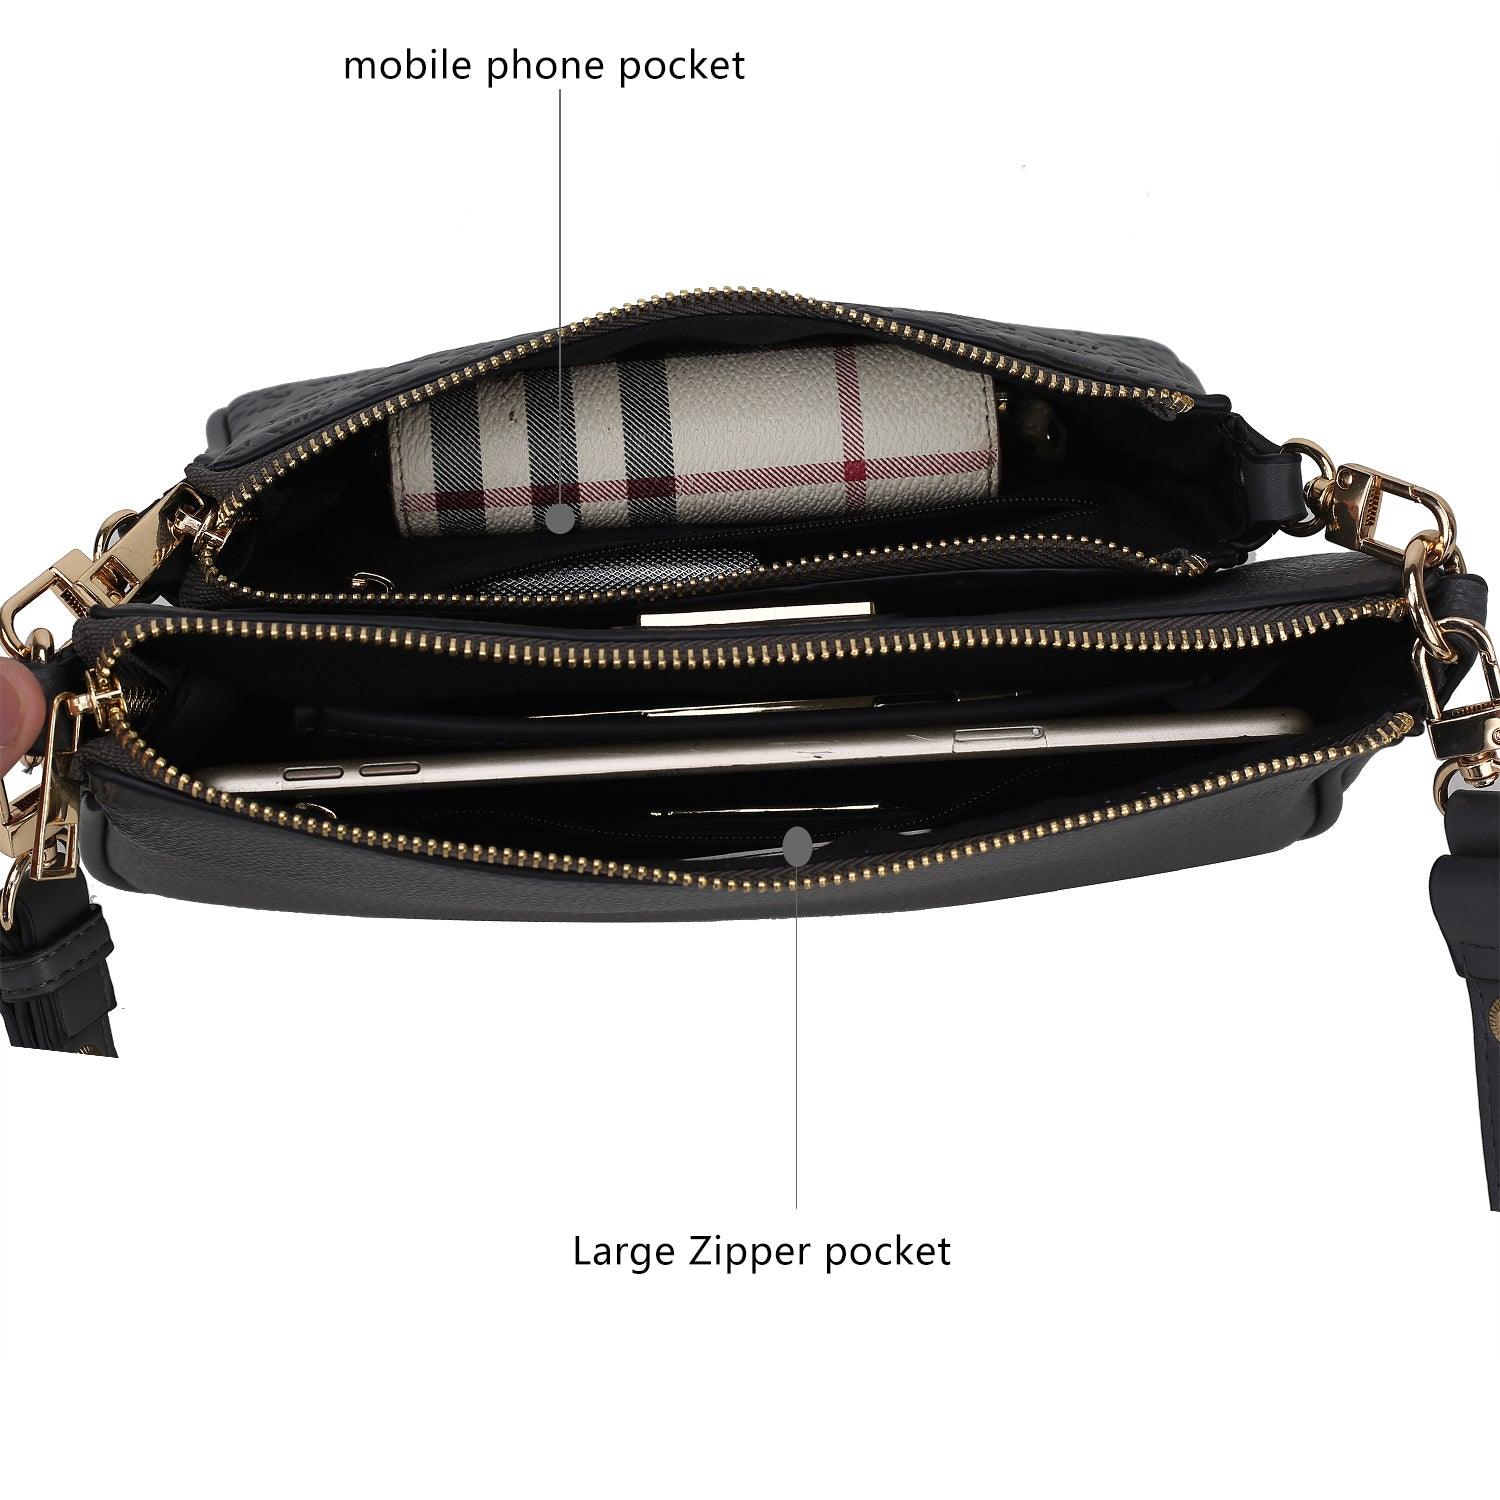 Wallets, Handbags & Accessories Dayla Vegan Leather Women’s Shoulder Bag